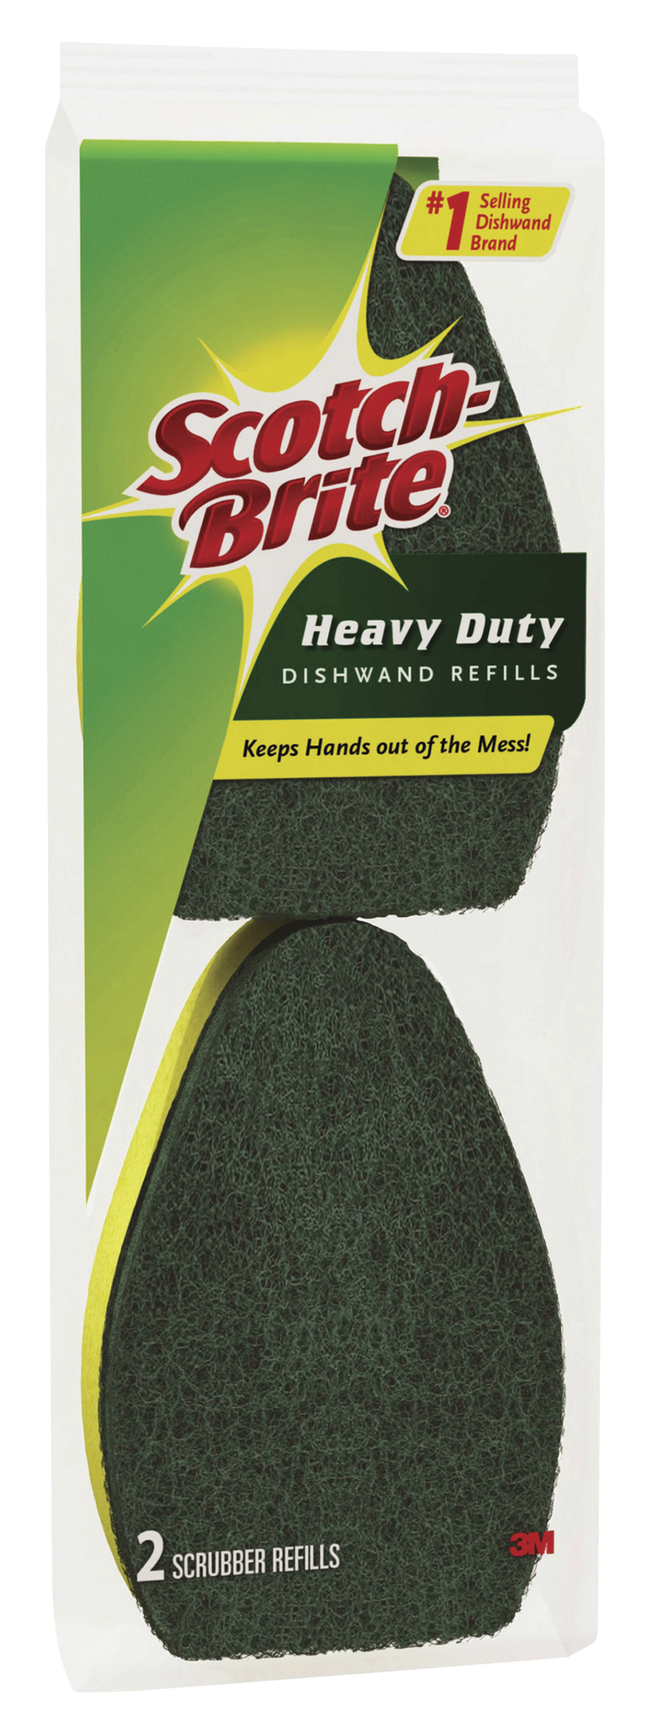 Scotch-brite Refill Sponge Heads for Heavy-duty Dishwand - 2 pack